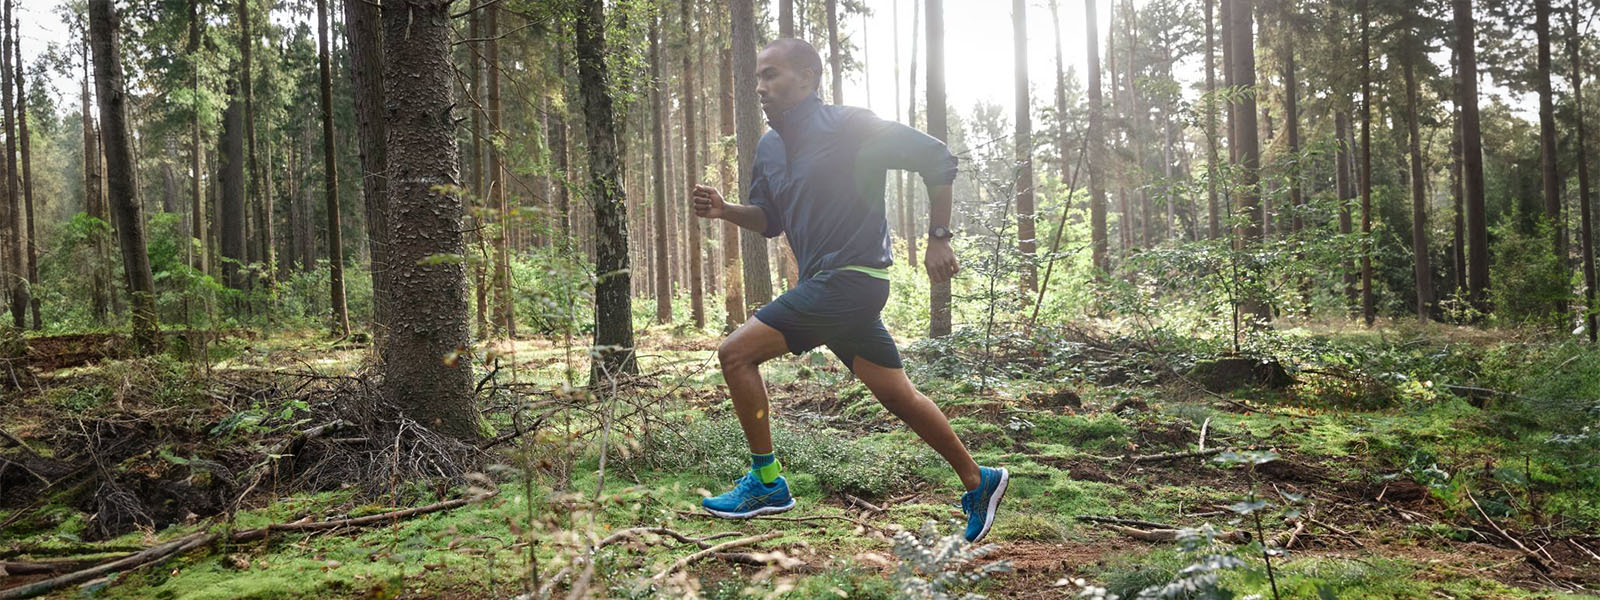 A runner is running through a dense forest against backlight